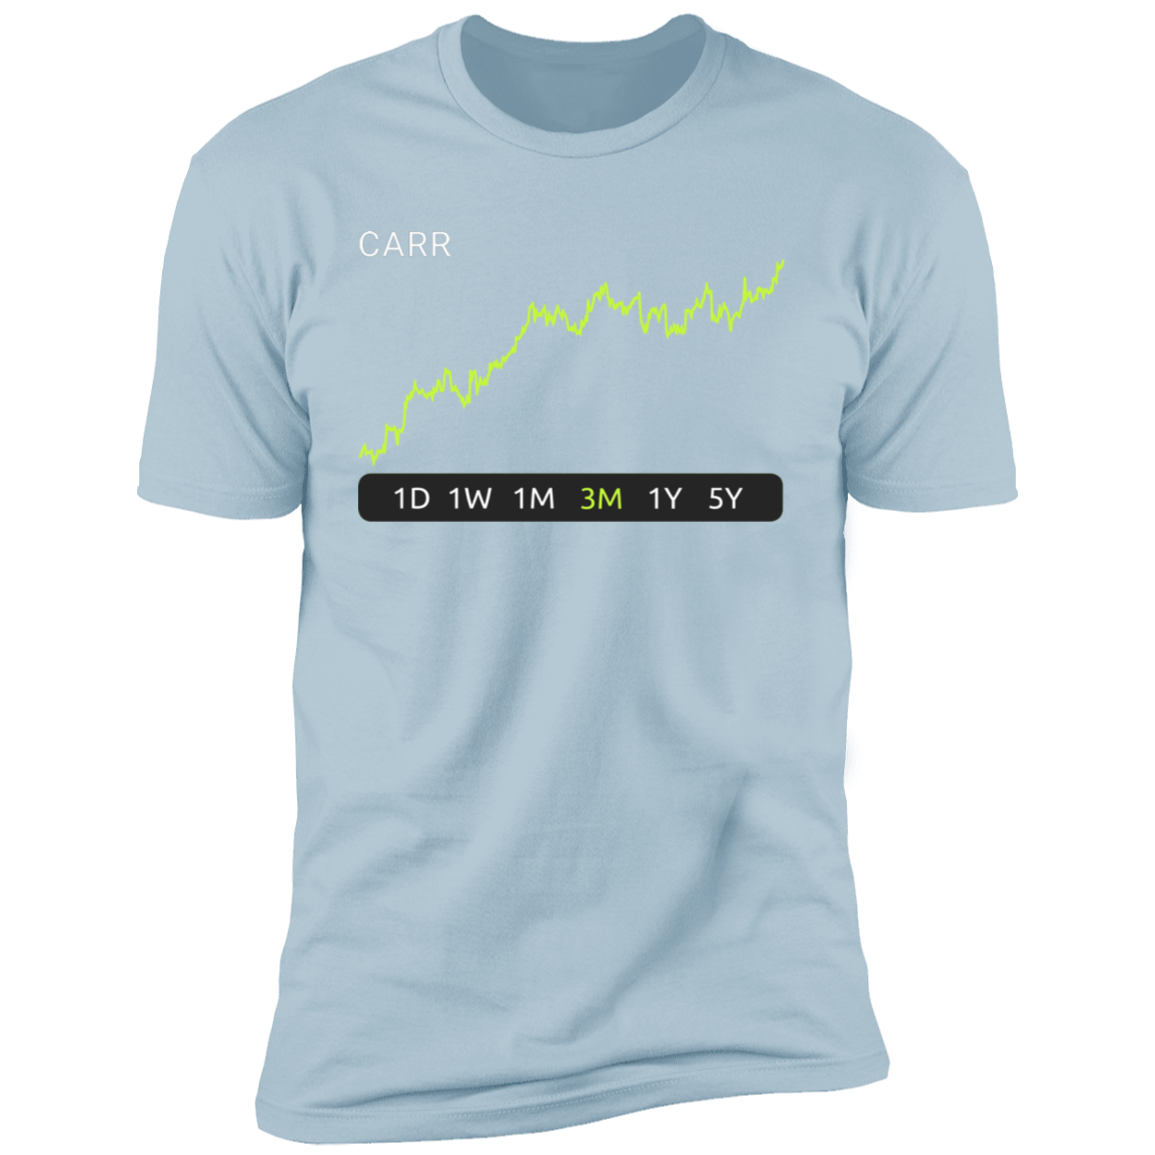 CARR Stock 3m Premium T-Shirt